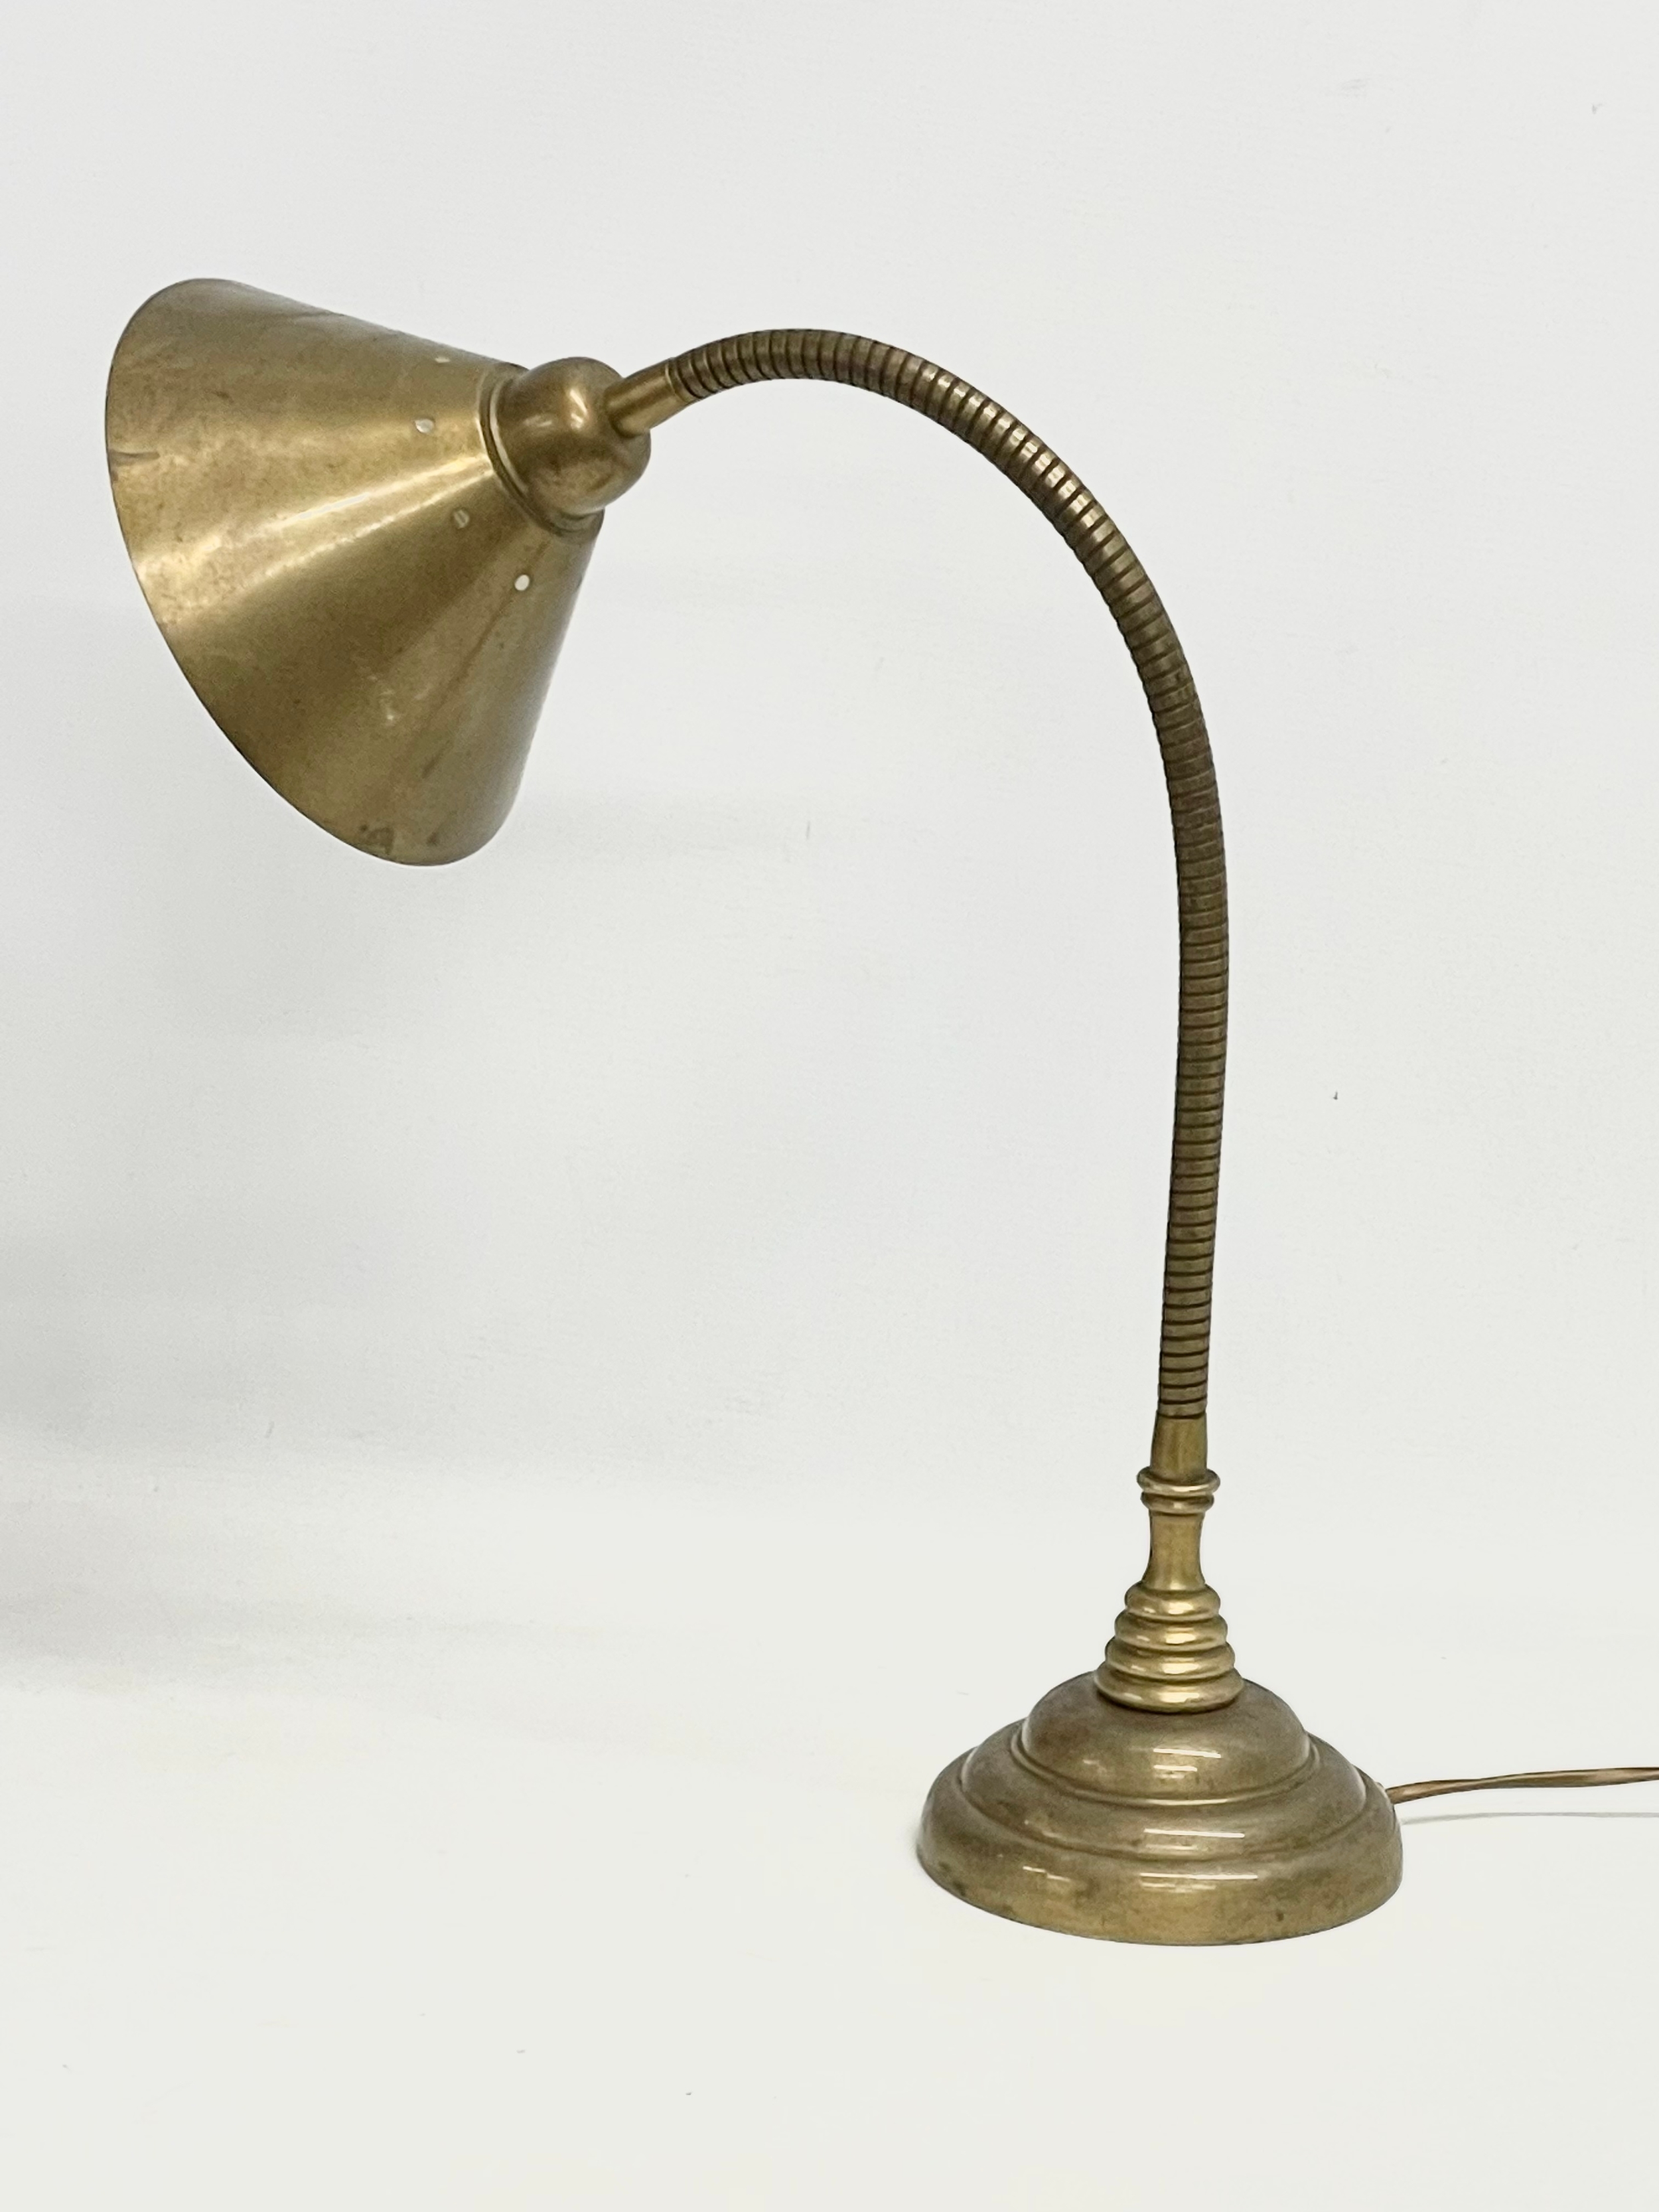 A large brass swan neck desk lamp.